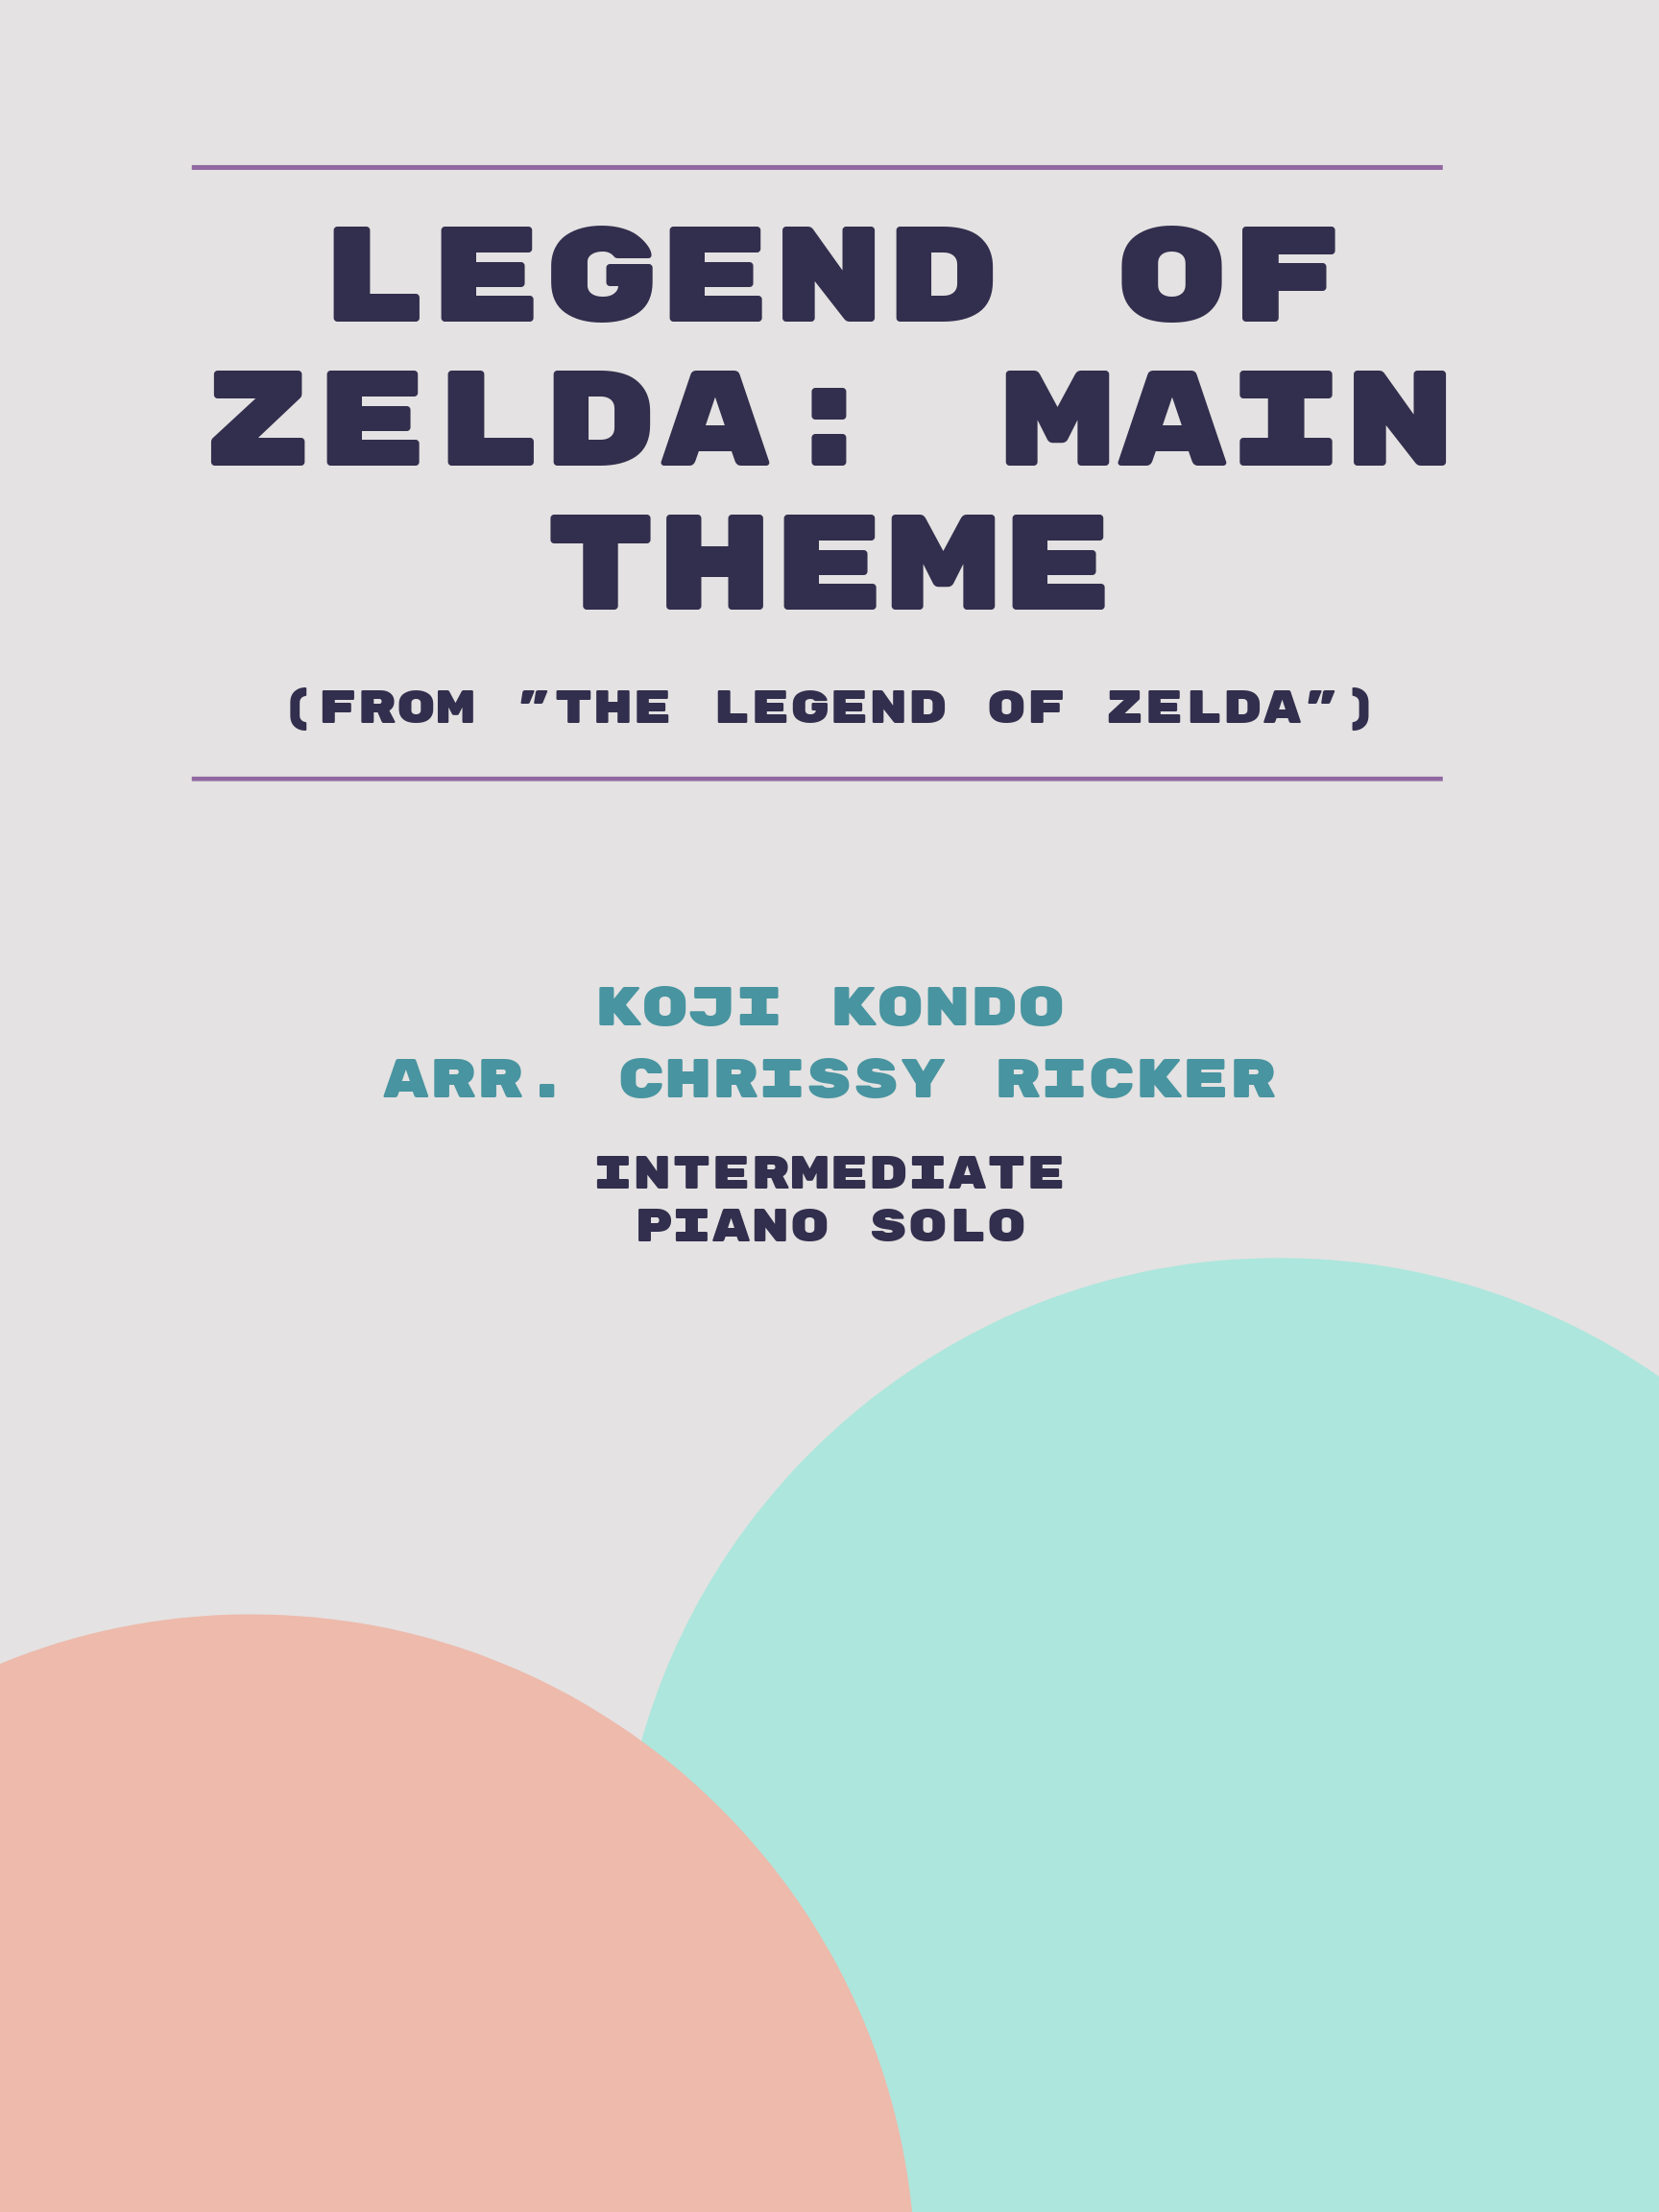 Legend of Zelda: Main Theme by Koji Kondo